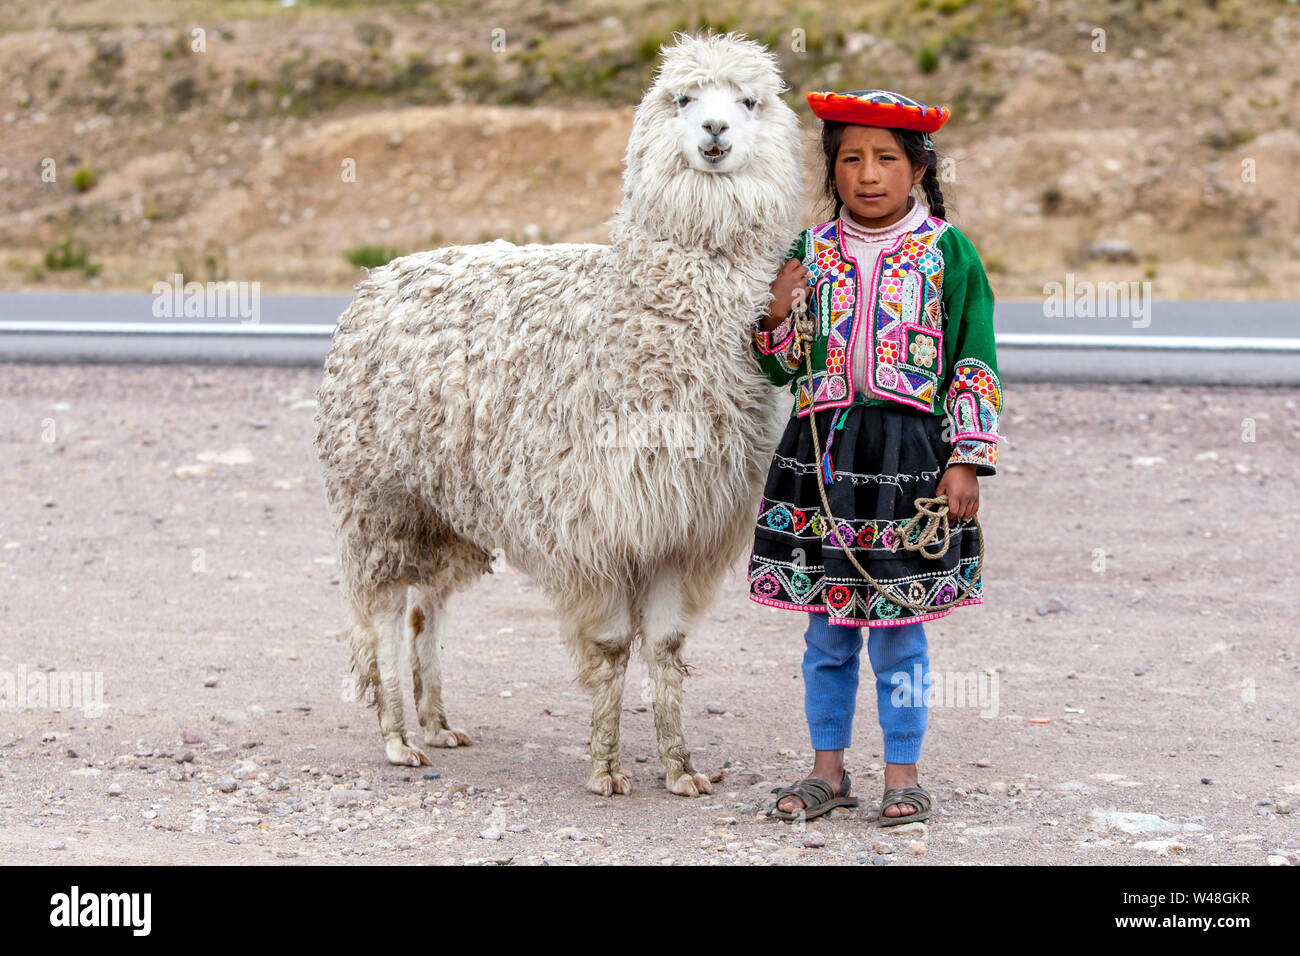 A Peruvian girl standing on the roadside holding a llama at La Region Puno Les Desea Feliz Viaje in Peru. Stock Photo